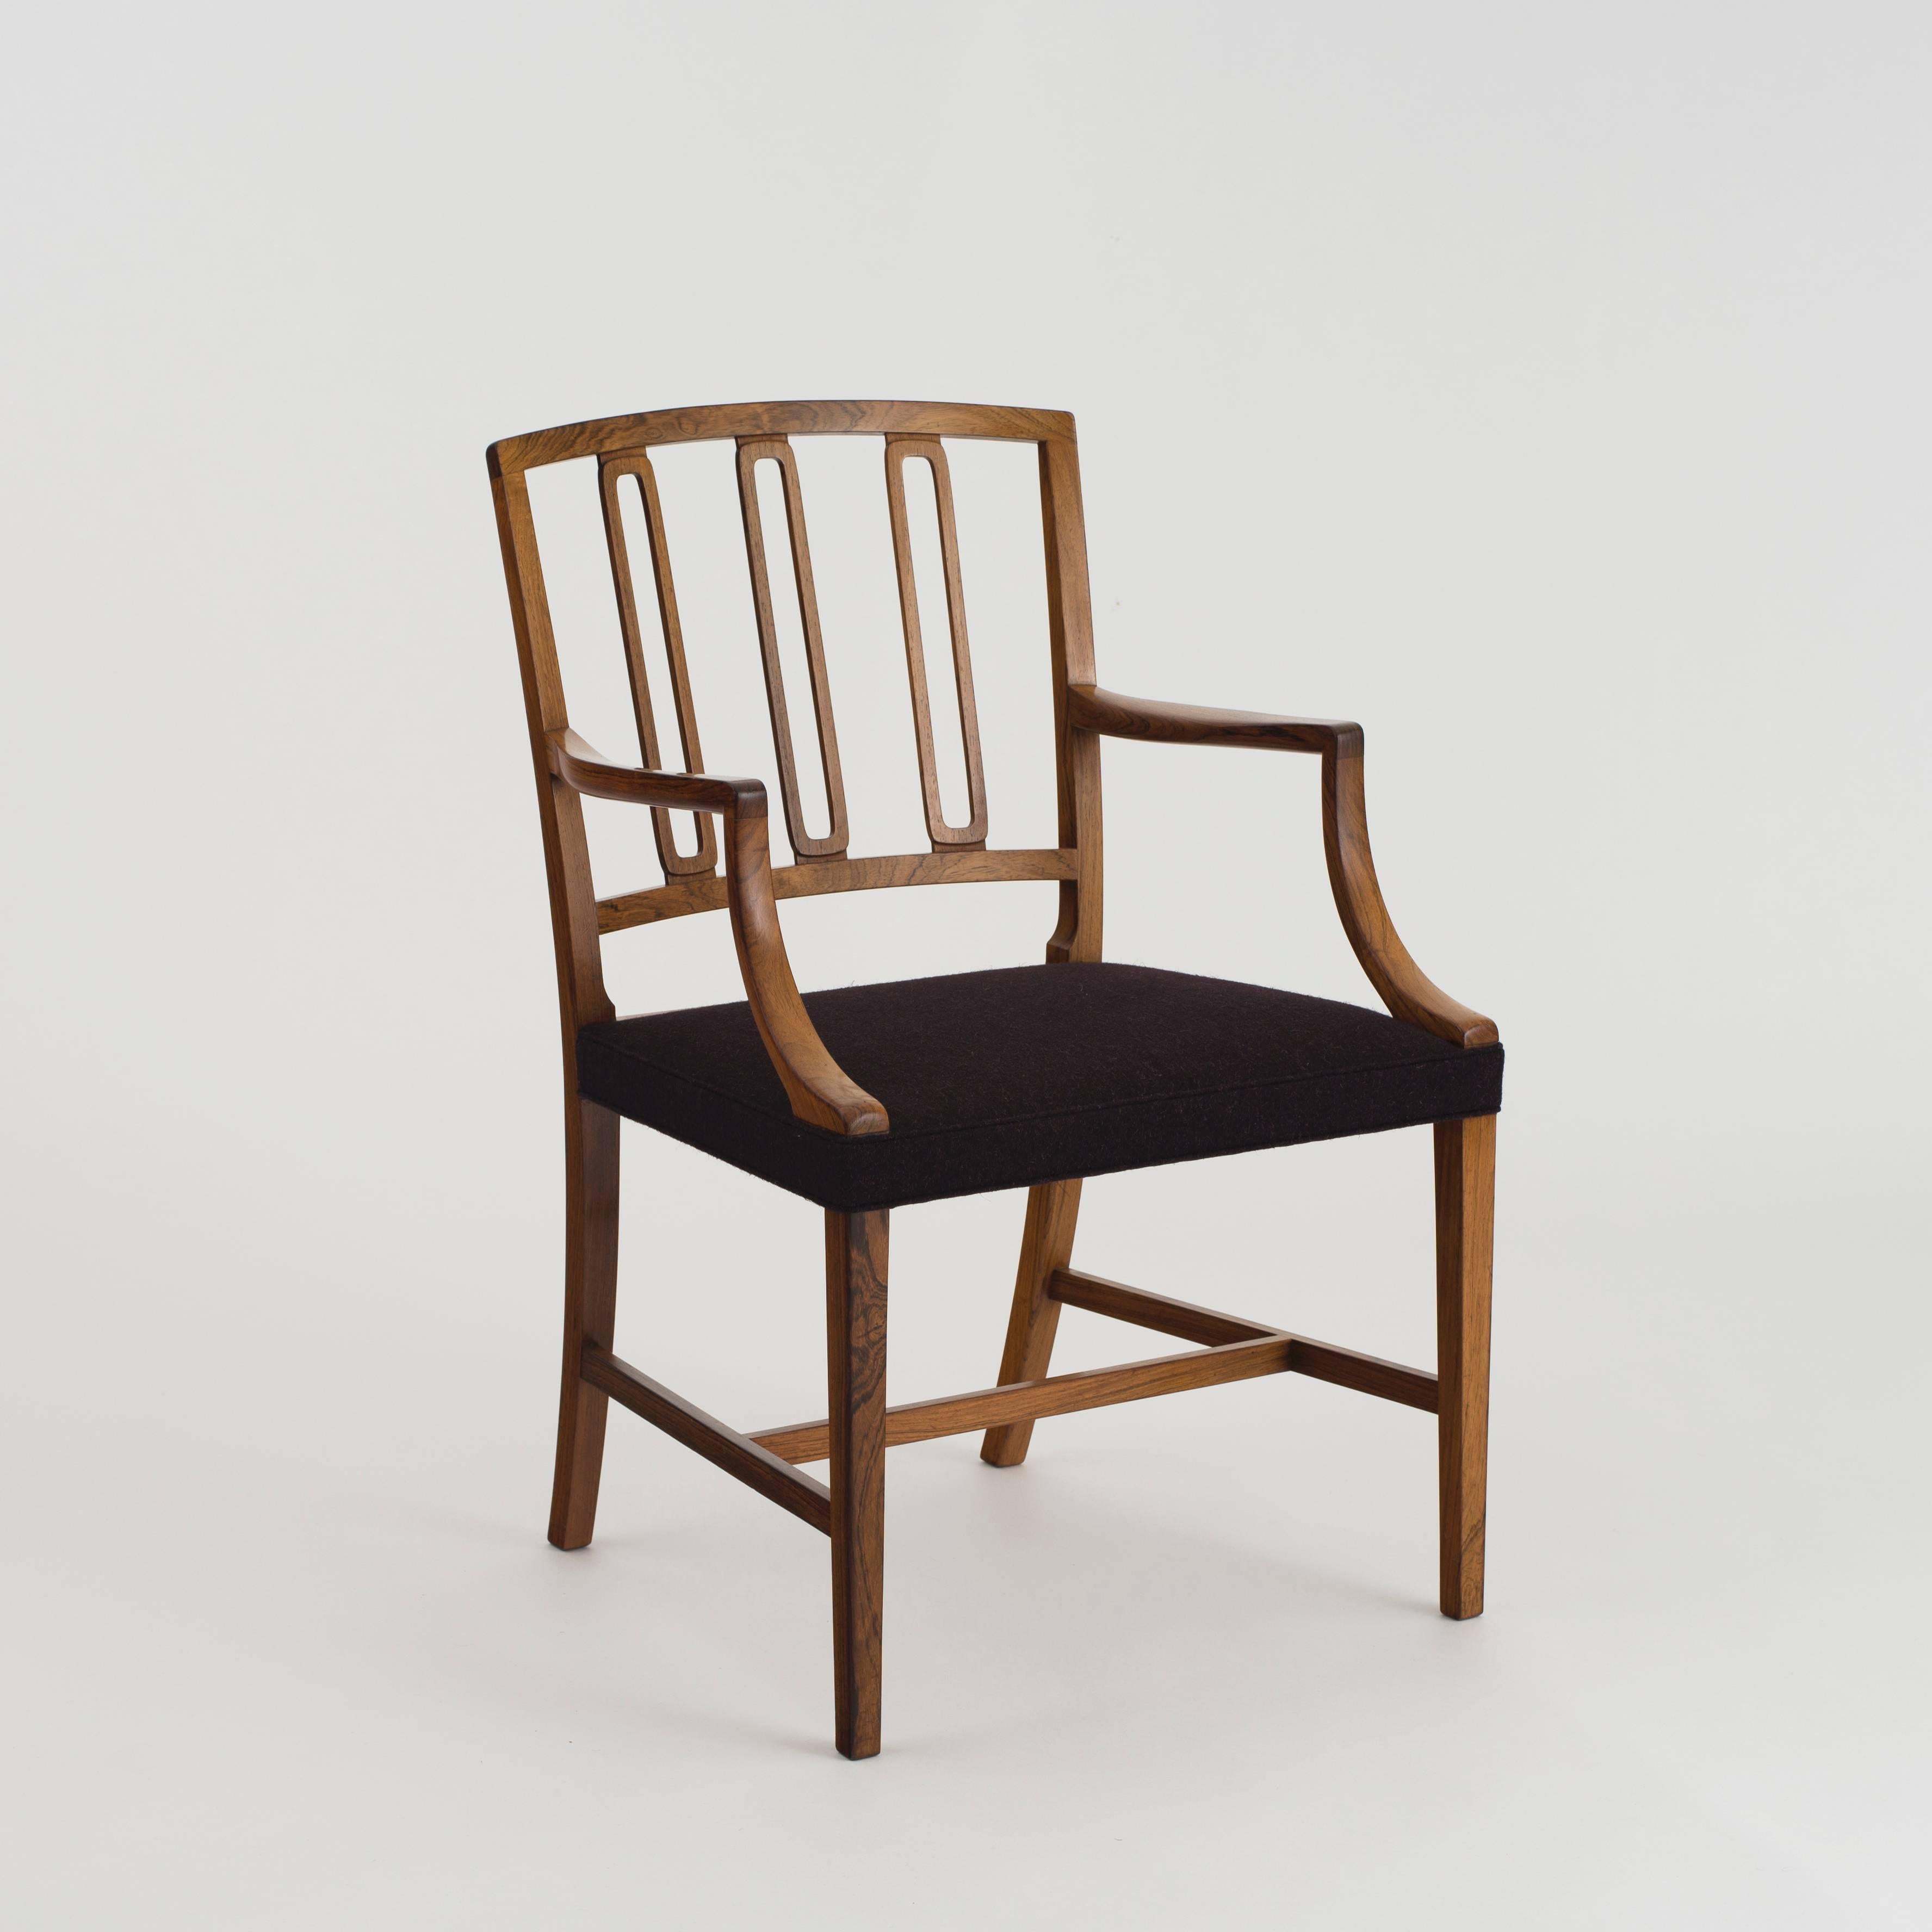 Jacob Kjaer, armchair.

Rosewood and fabric.

Executed by Jacob Kjaer, Copenhagen, Denmark, 1951.
  